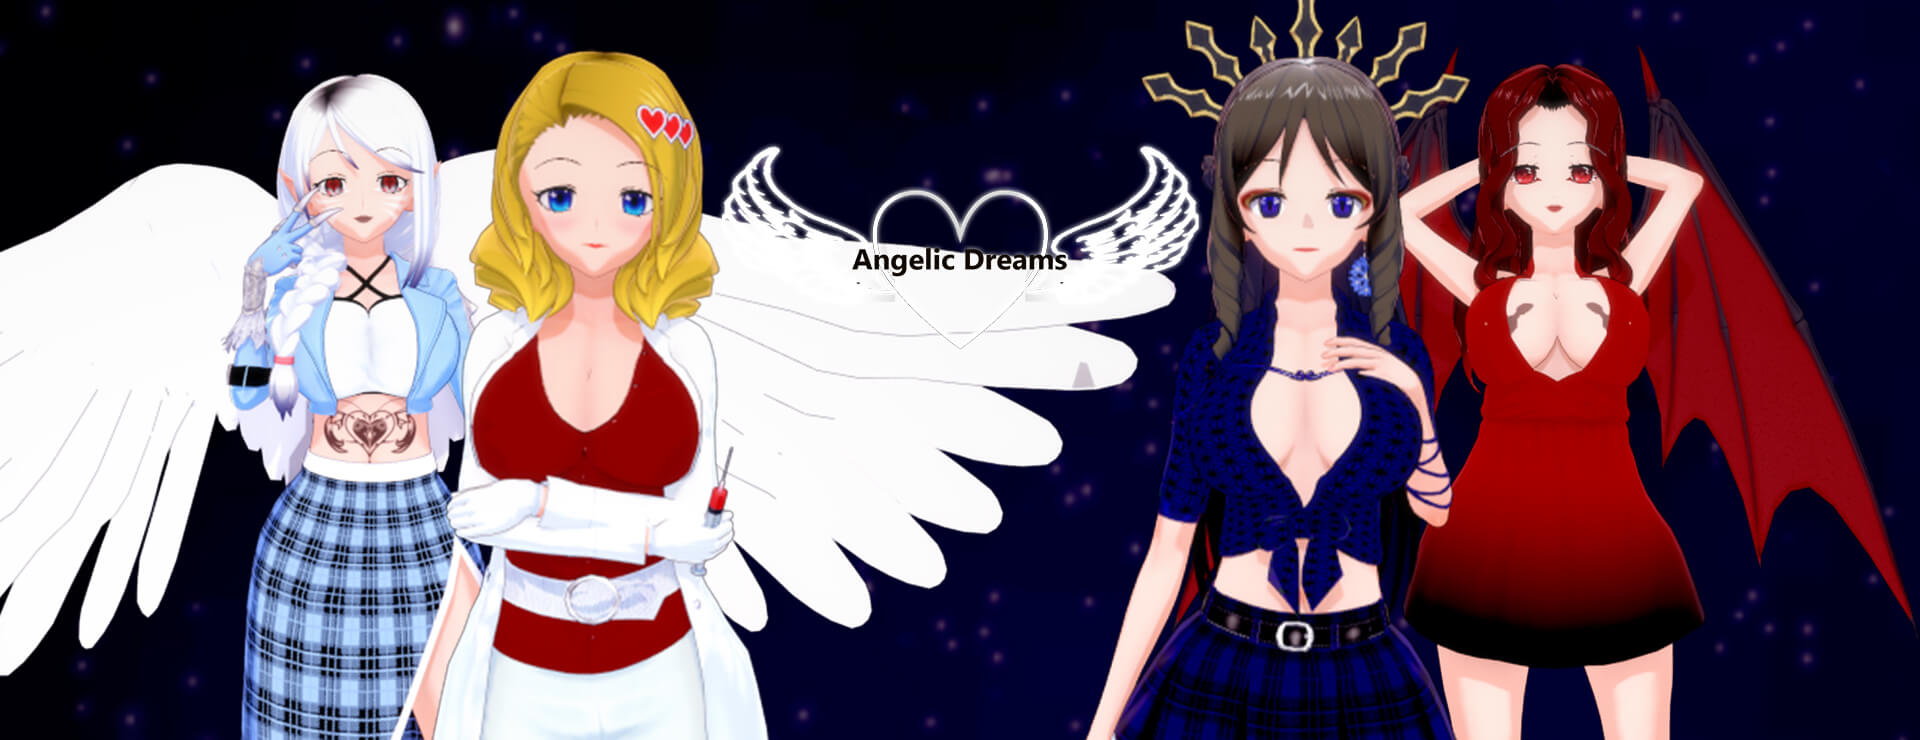 Angelic Dreams - Novela Visual Juego